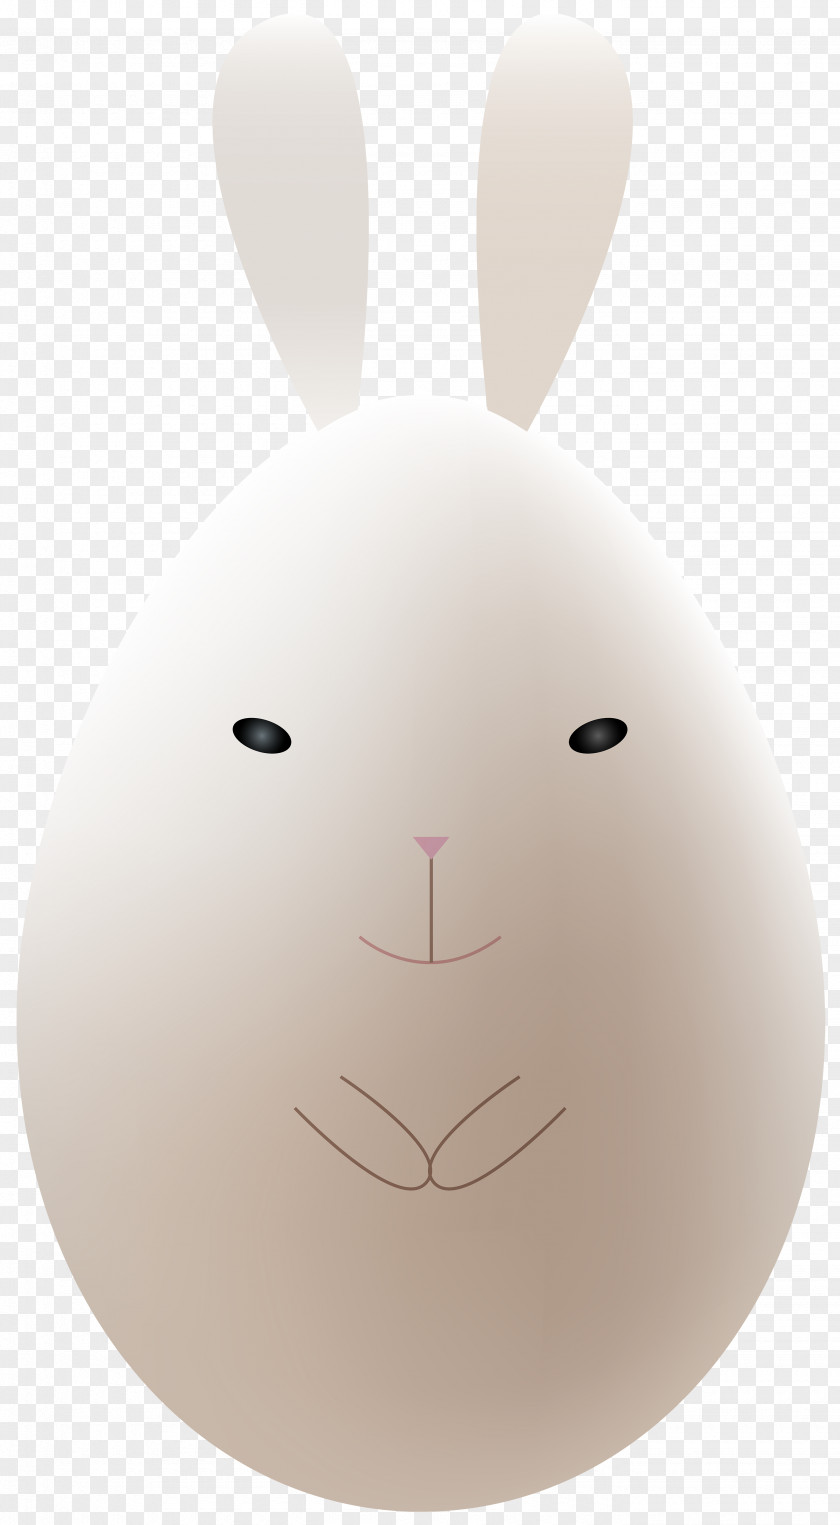 Easter Bunny Egg Clip Art Image European Rabbit Chicken PNG